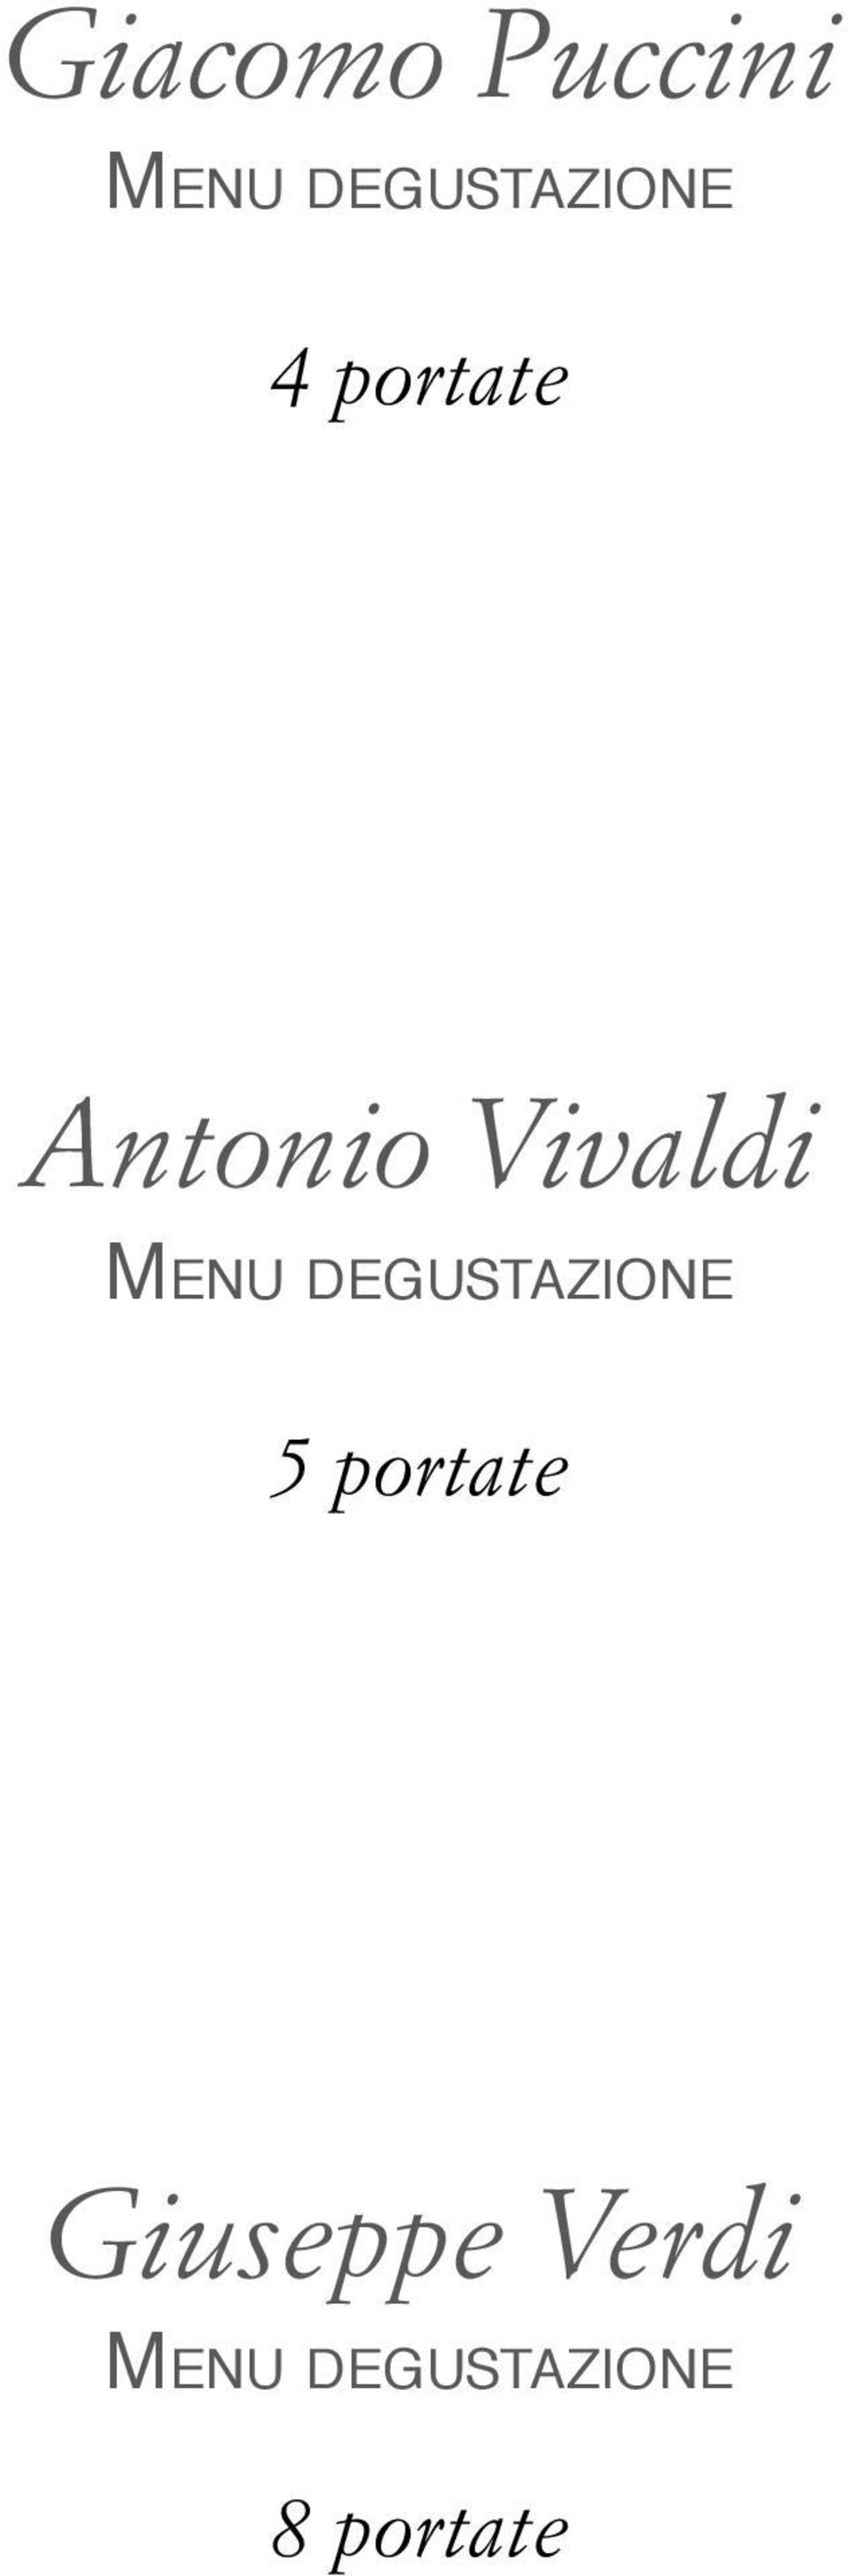 Vivaldi Menu degustazione 5